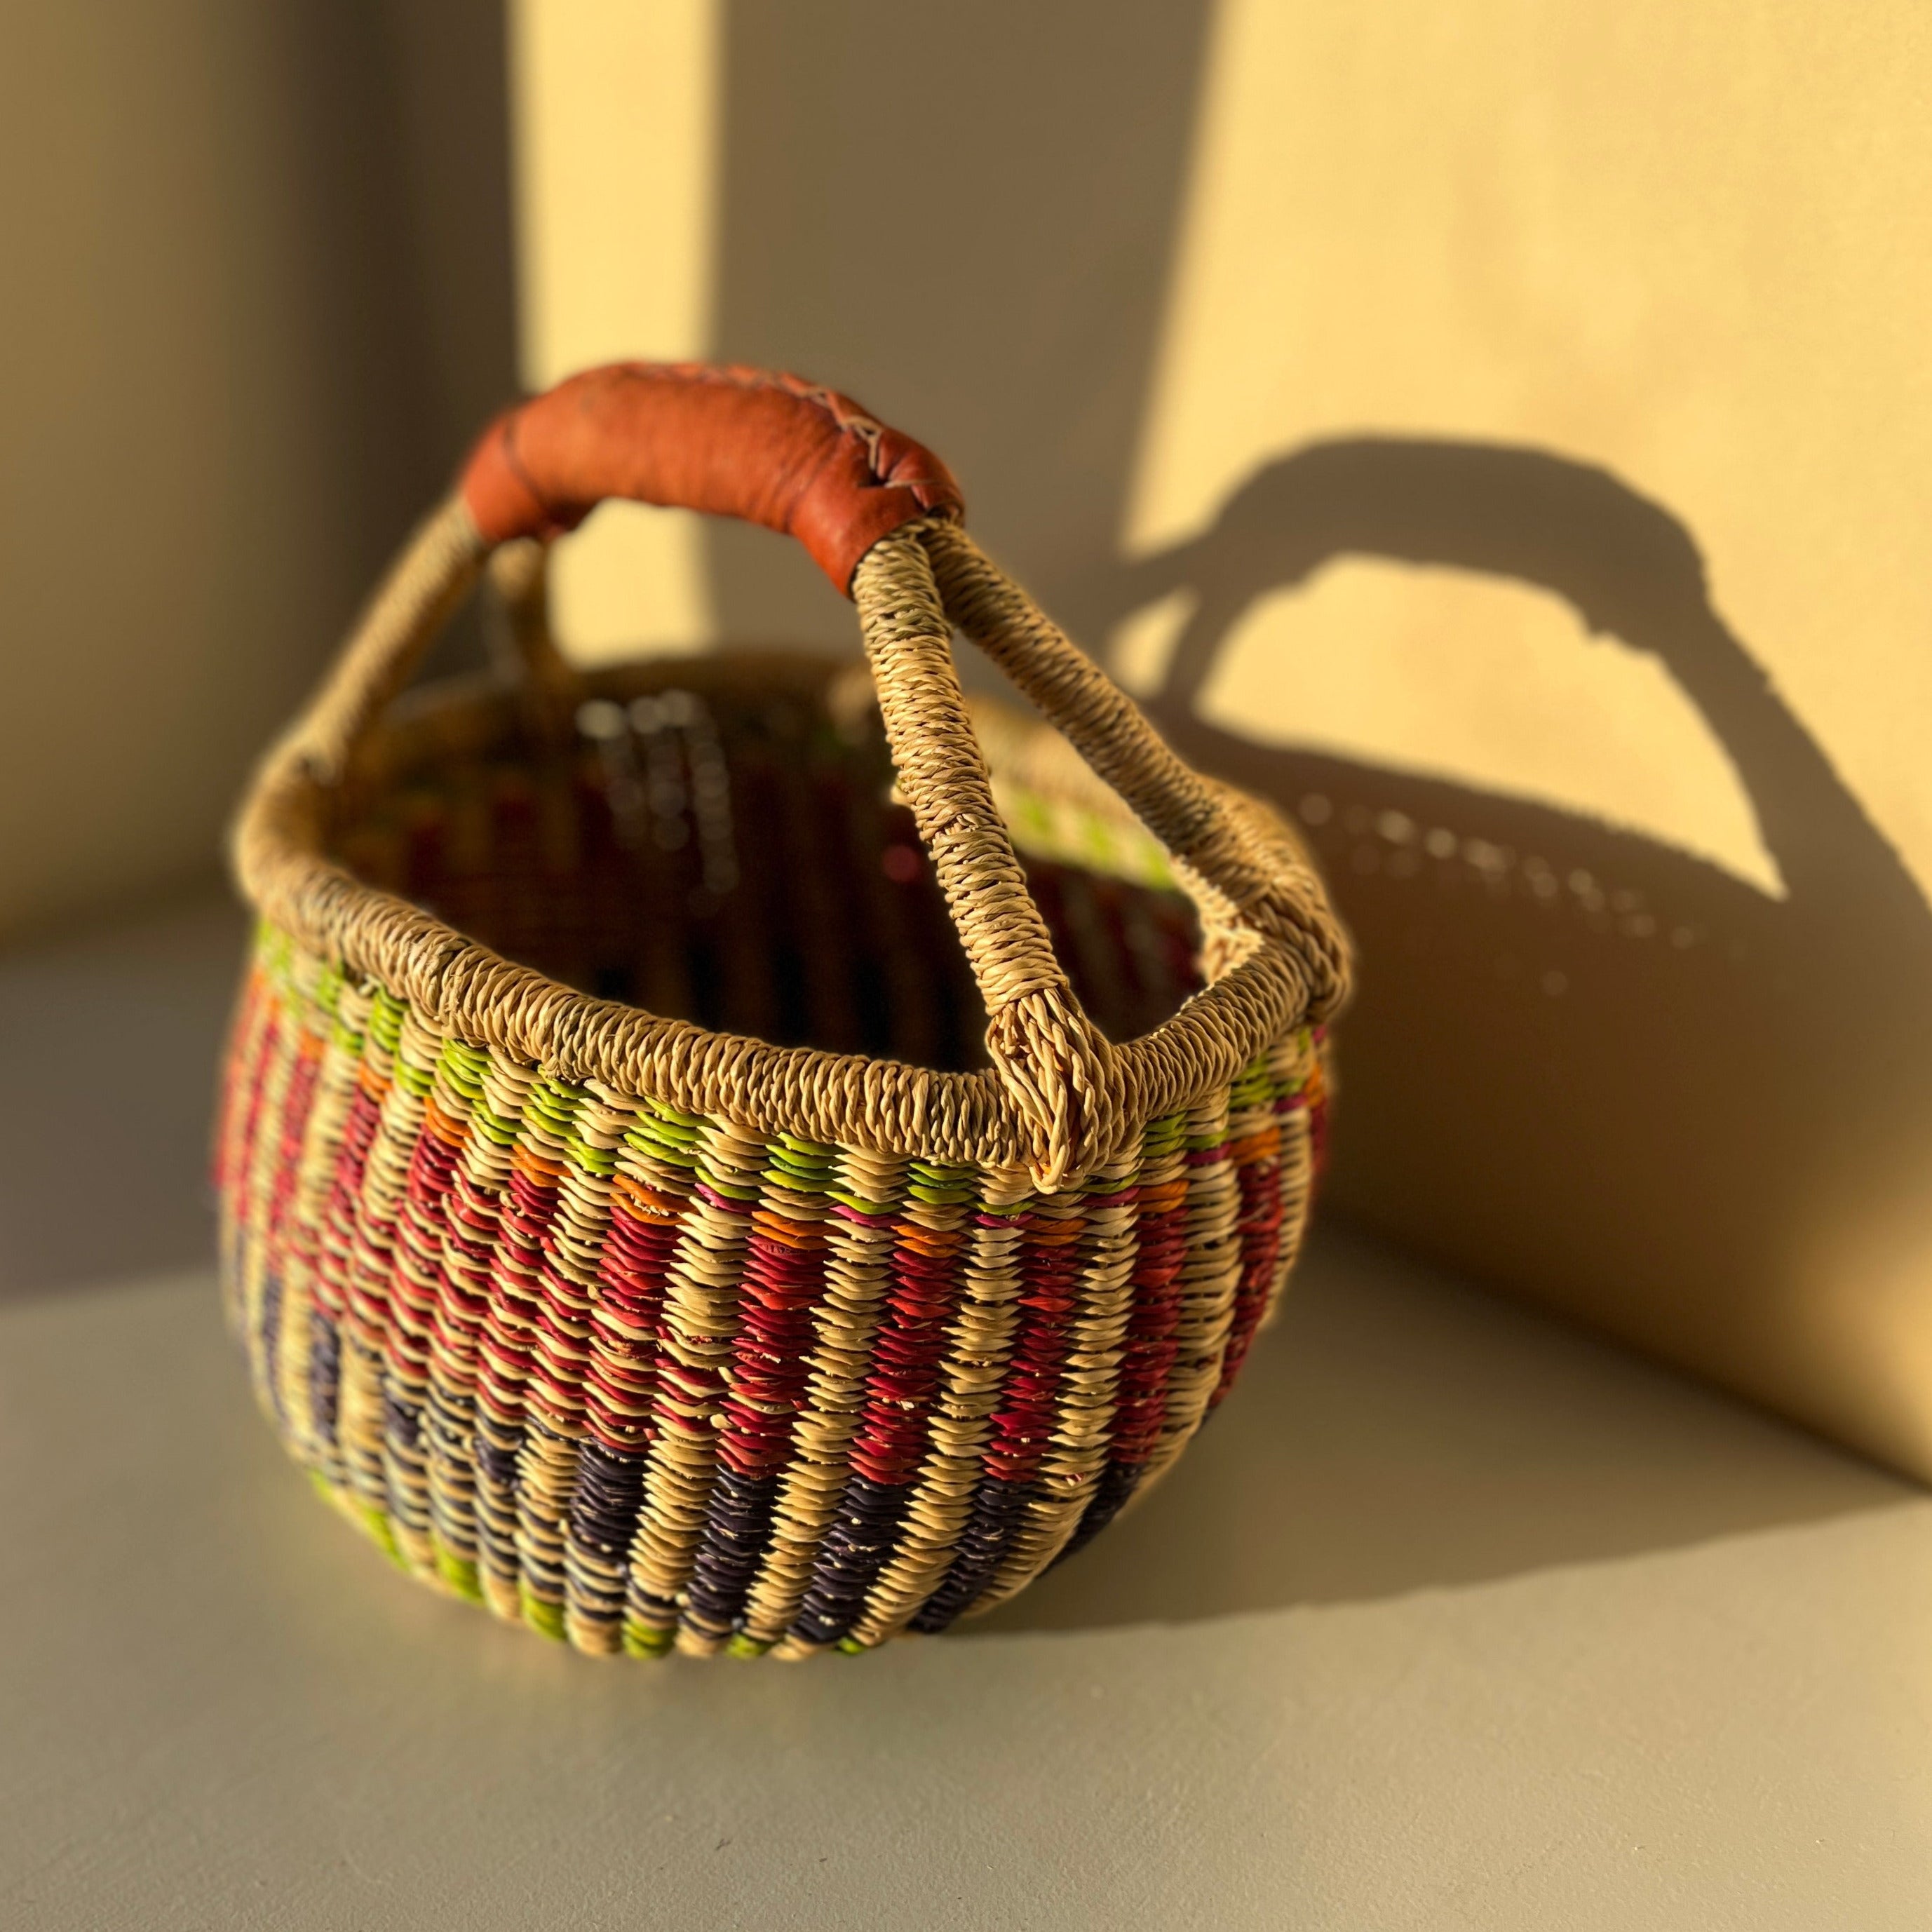 Seagrass basket small No. 9